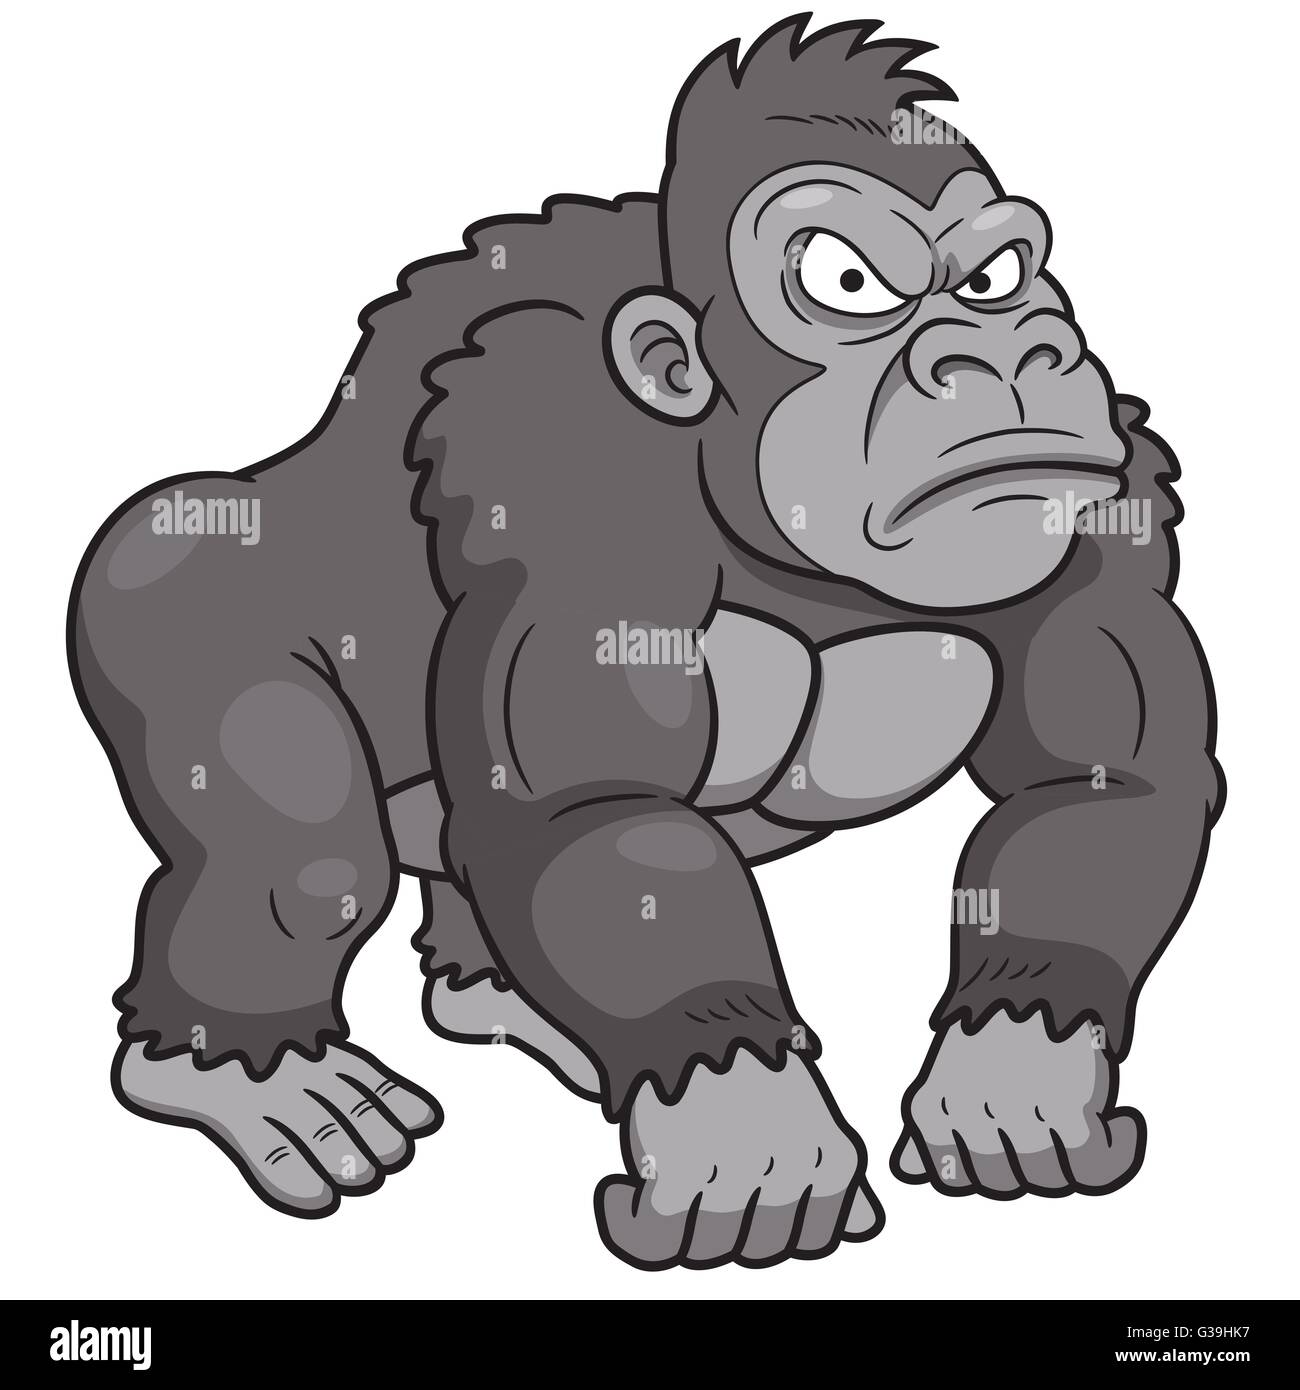 Illustration Vecteur de Gorilla Cartoon Illustration de Vecteur